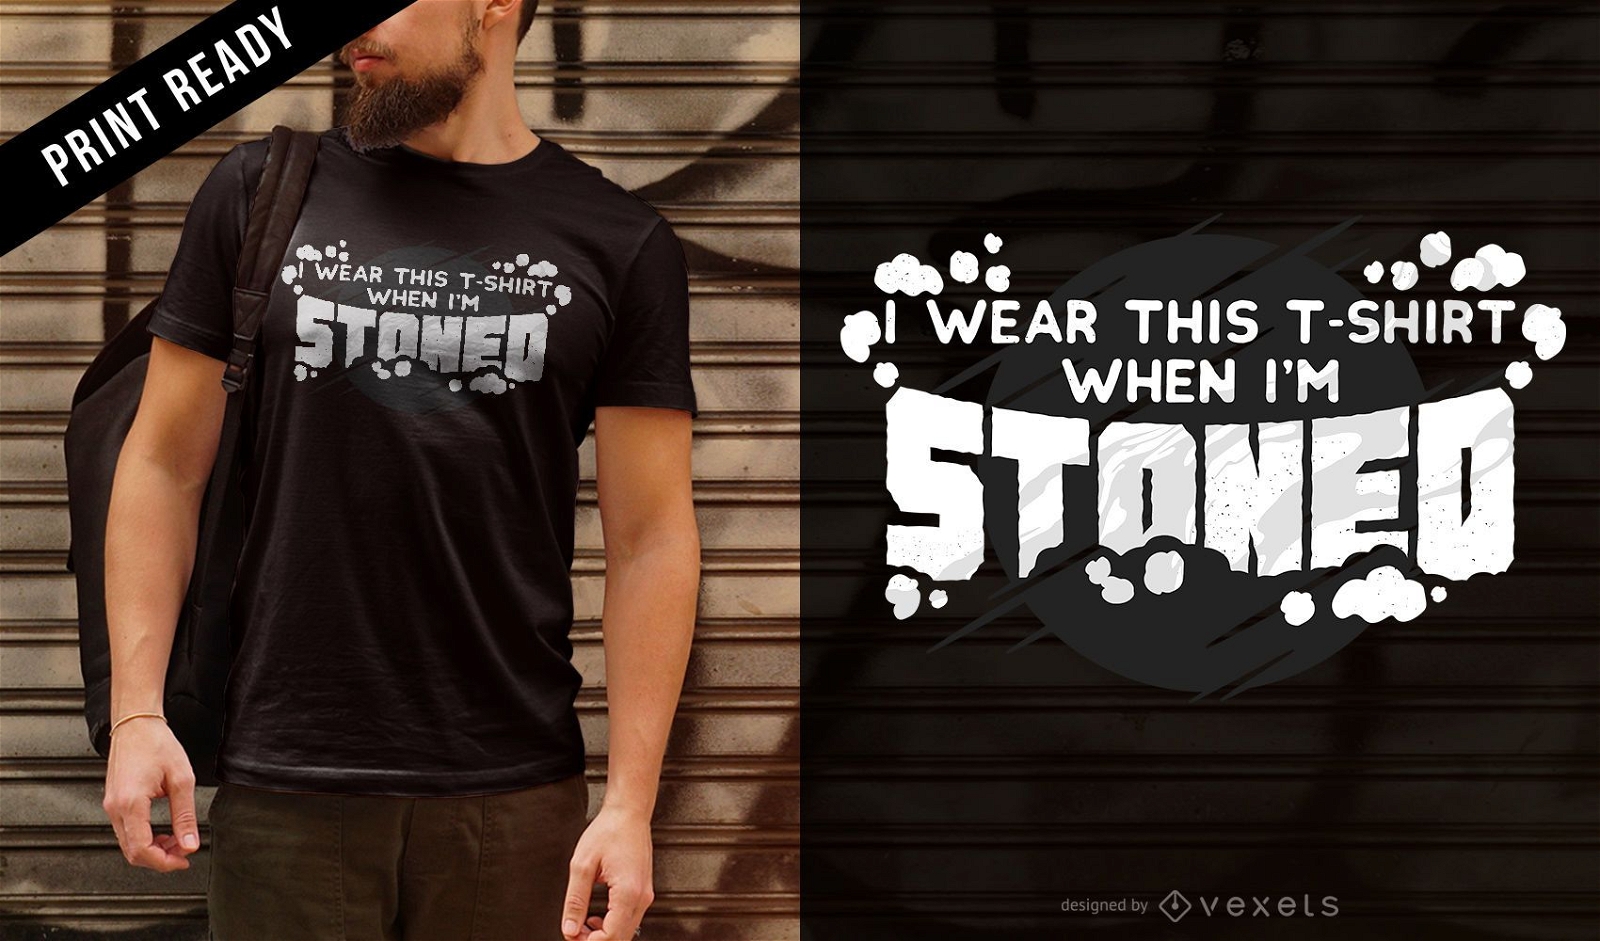 Stoned t-shirt design